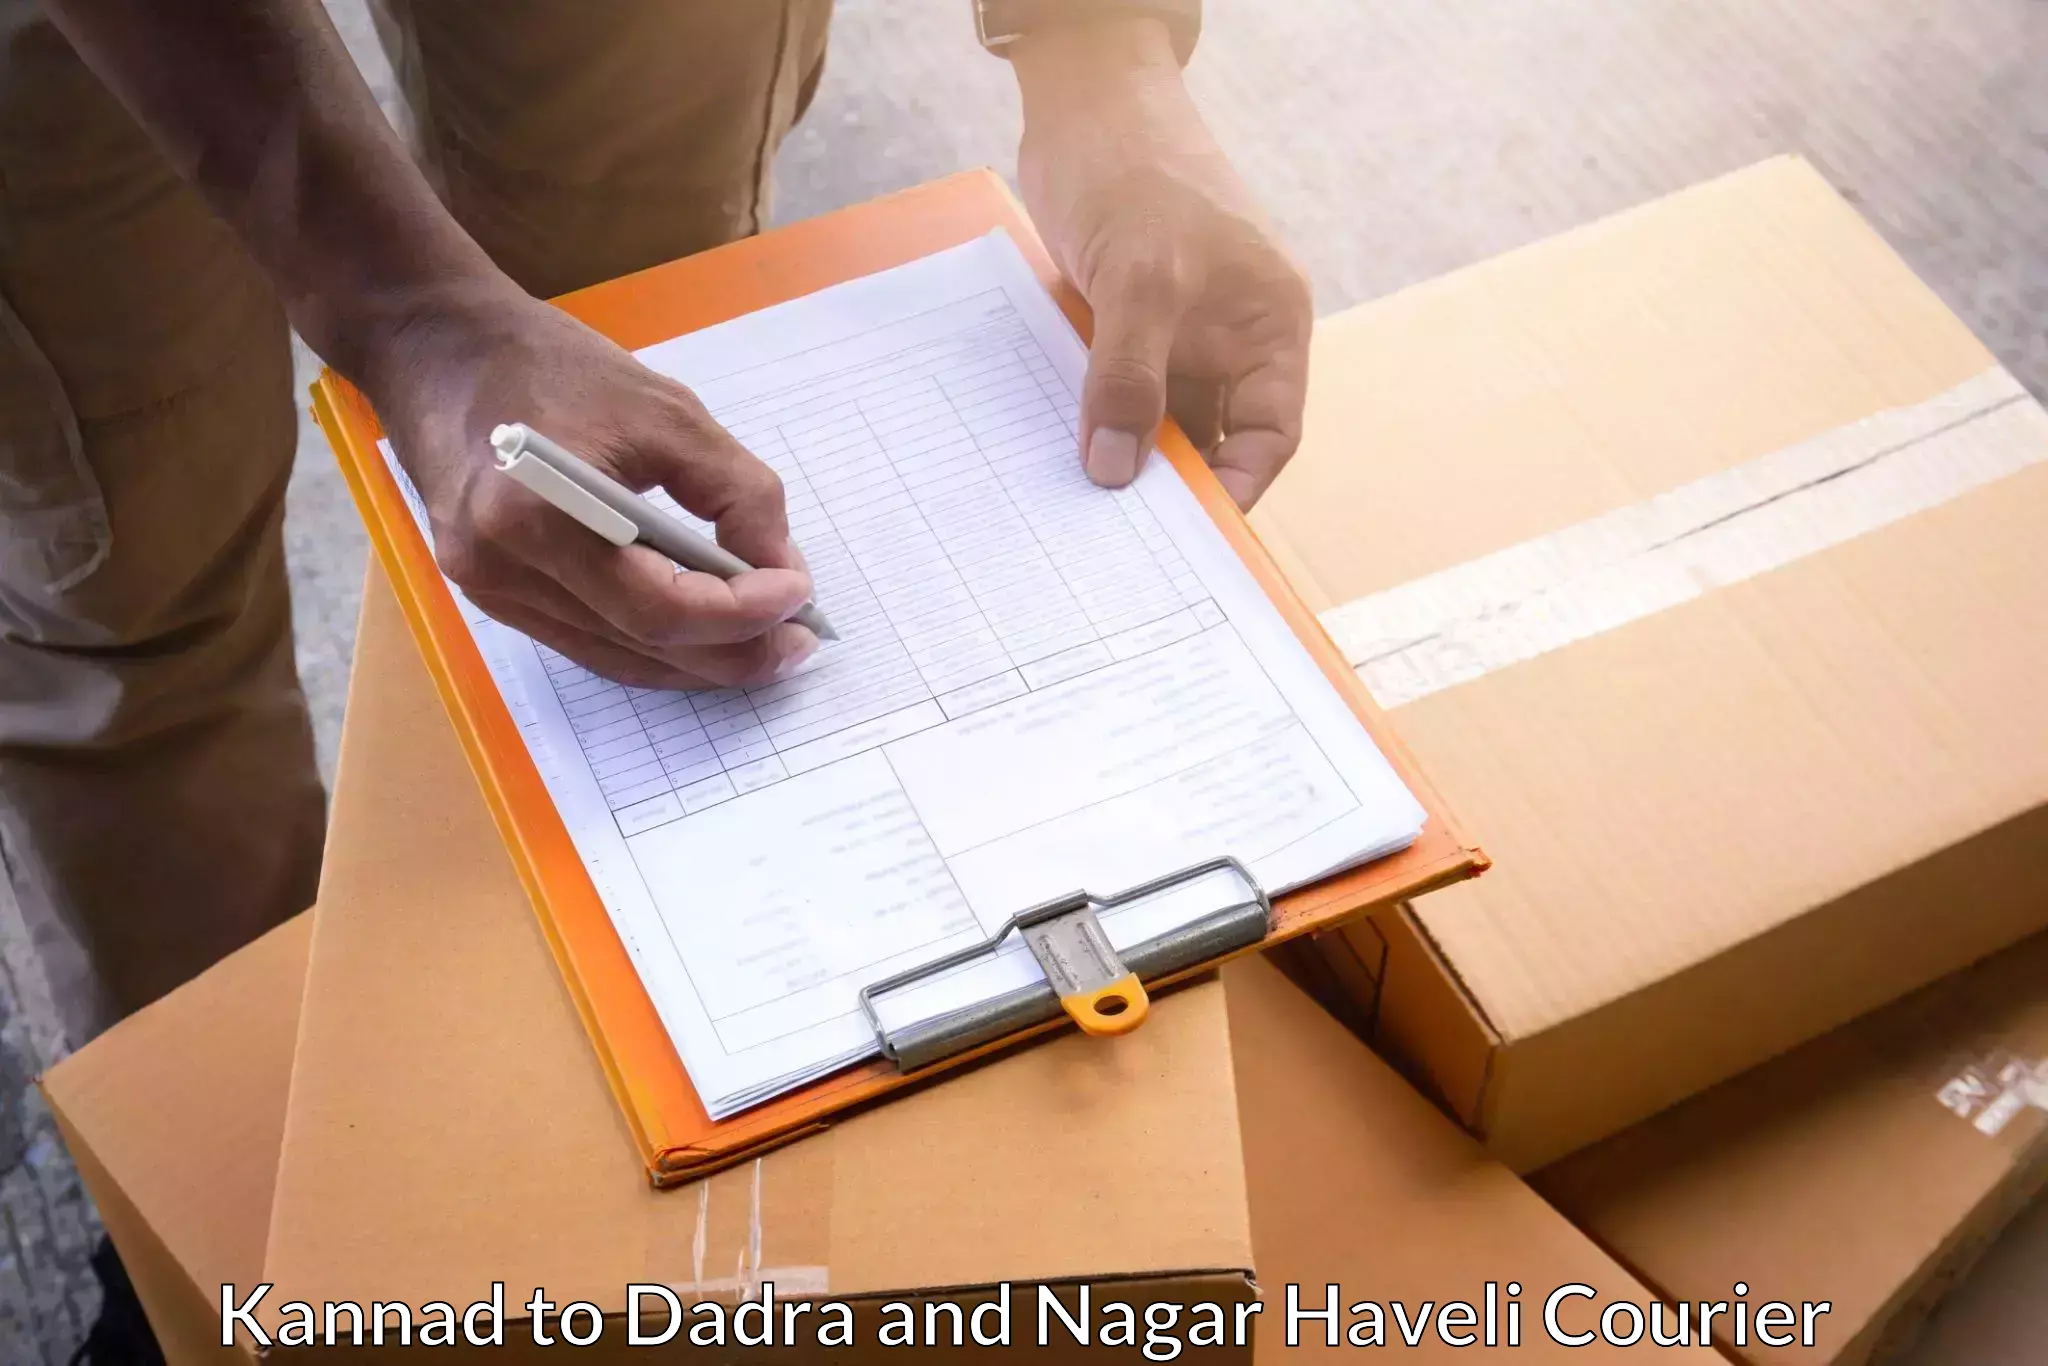 Modern courier technology Kannad to Dadra and Nagar Haveli